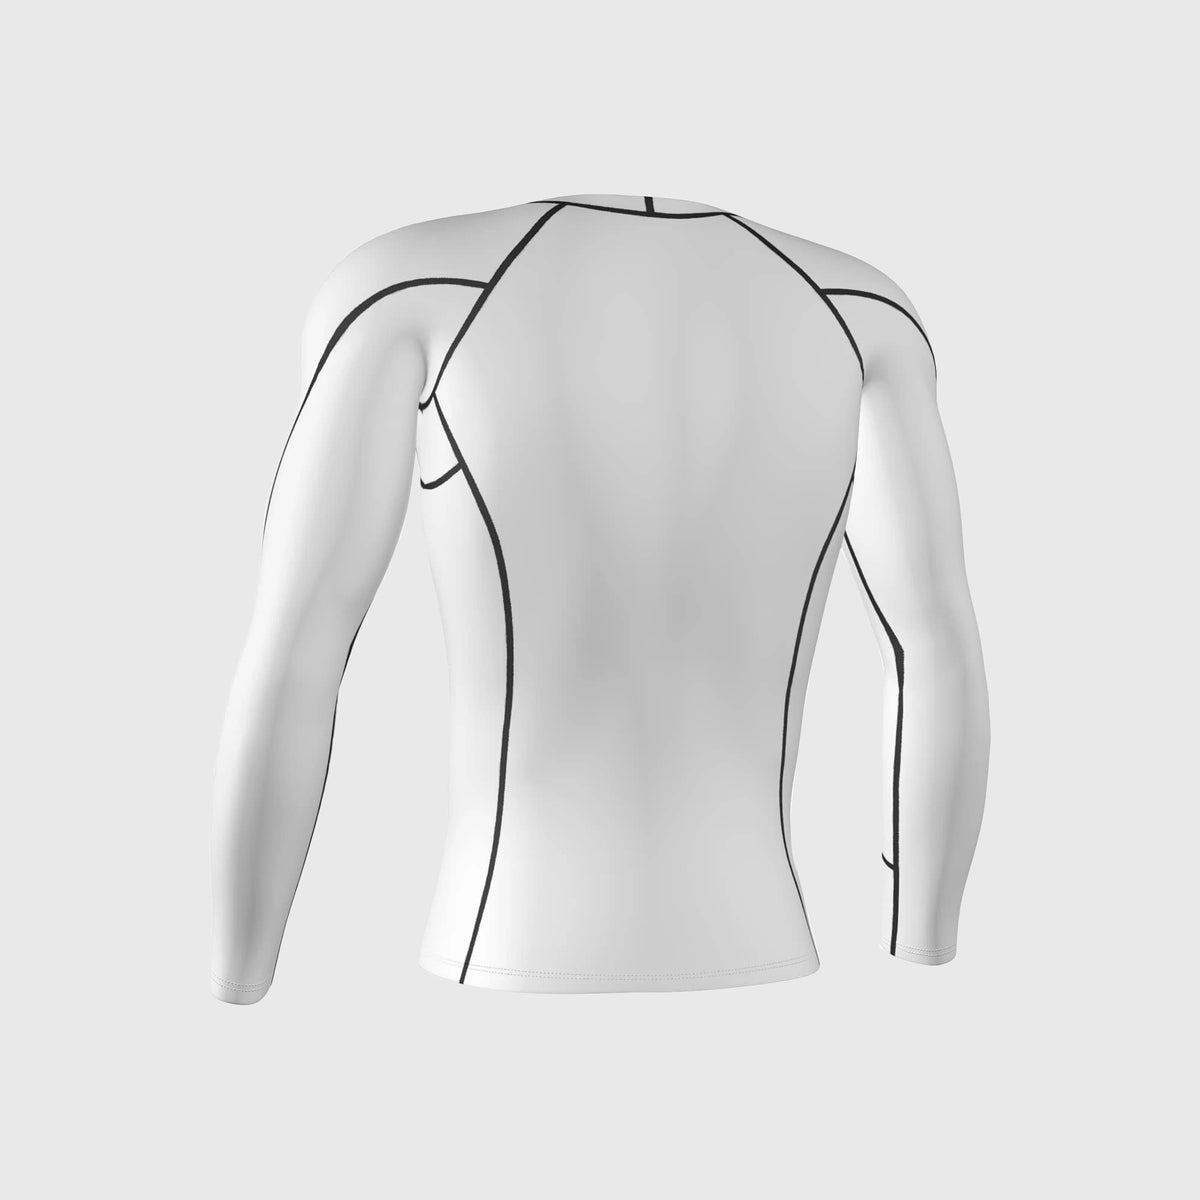 Fdx Cosmic Men's Long Sleeve Thermal Winter Gym Shirt White